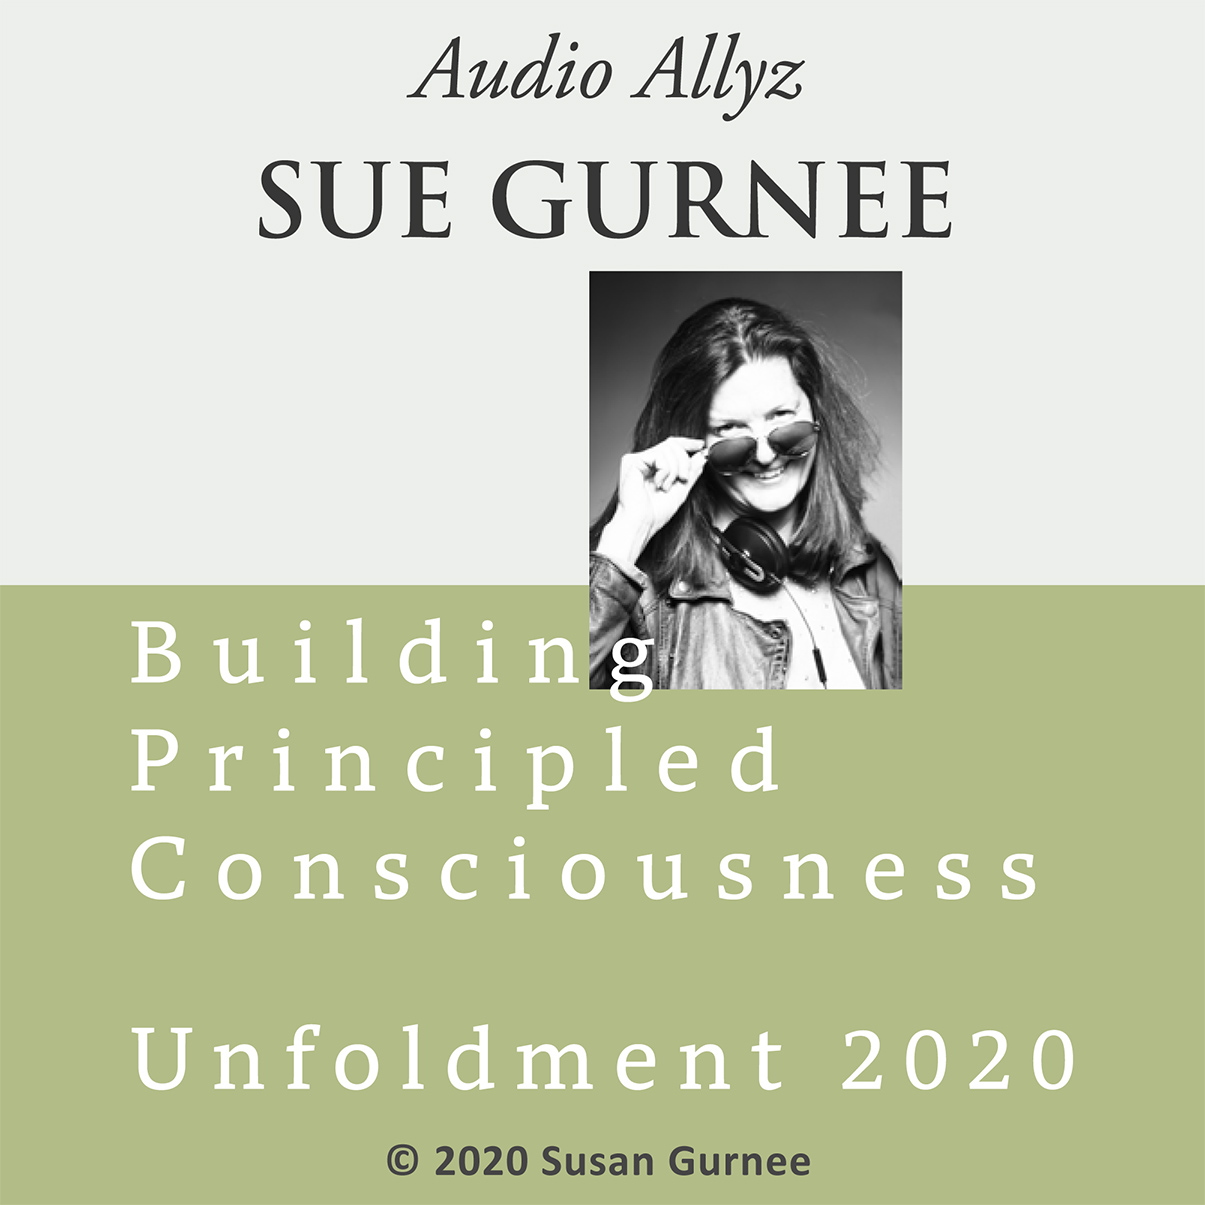 Audio Allyz Sue Gurnee - Unfoldment 2020 - Building Principled Consciousness